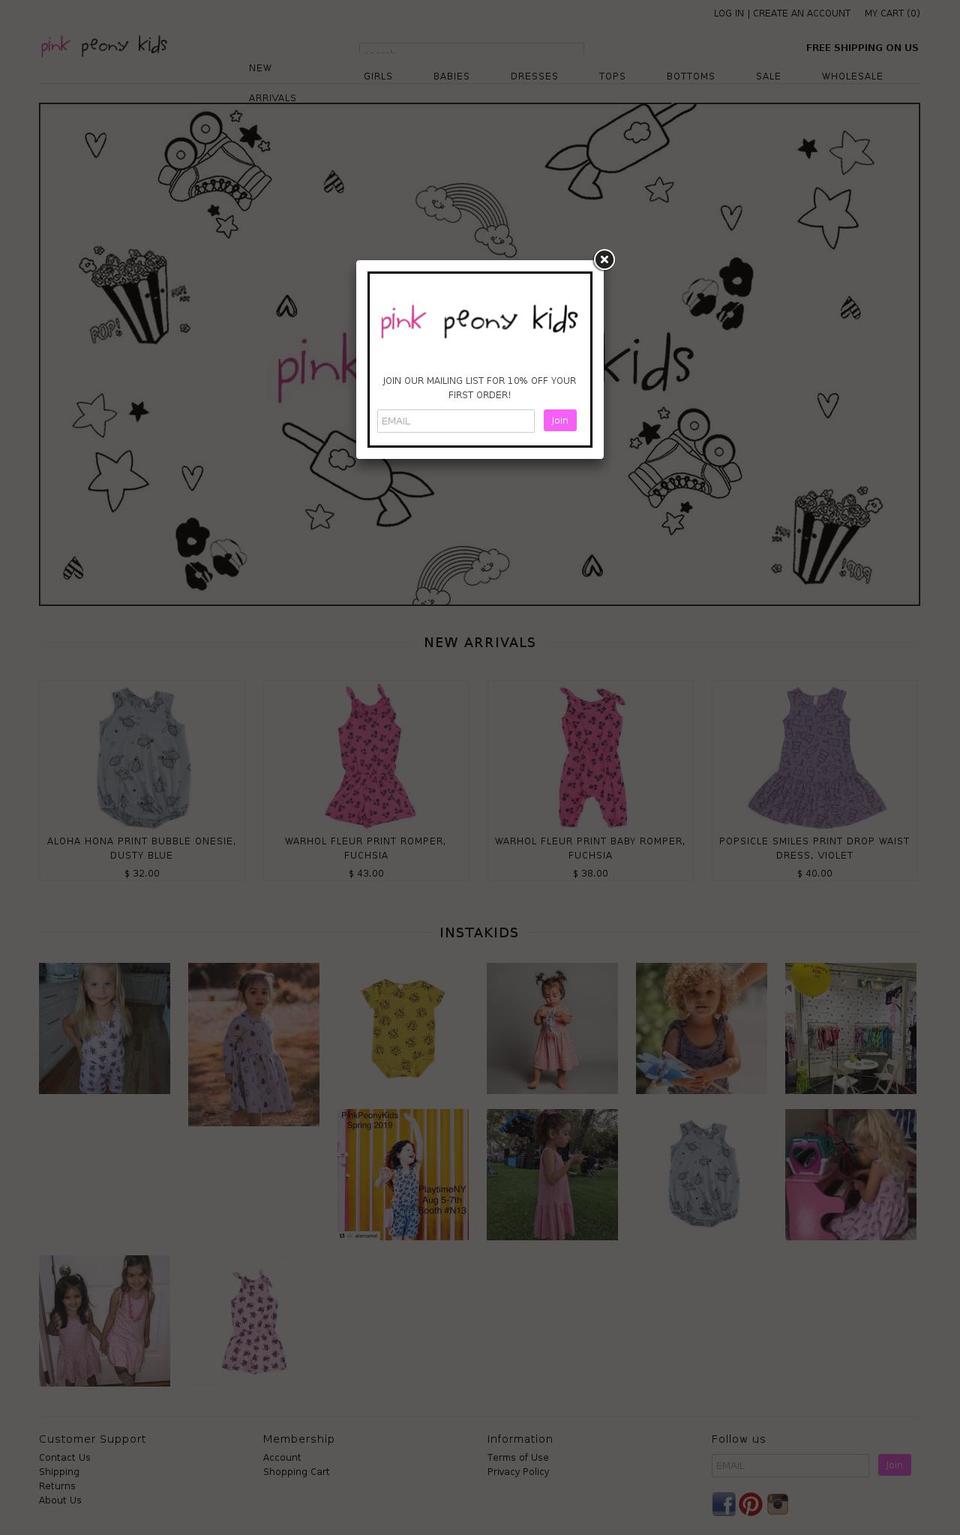 pinkpeonykids.com shopify website screenshot